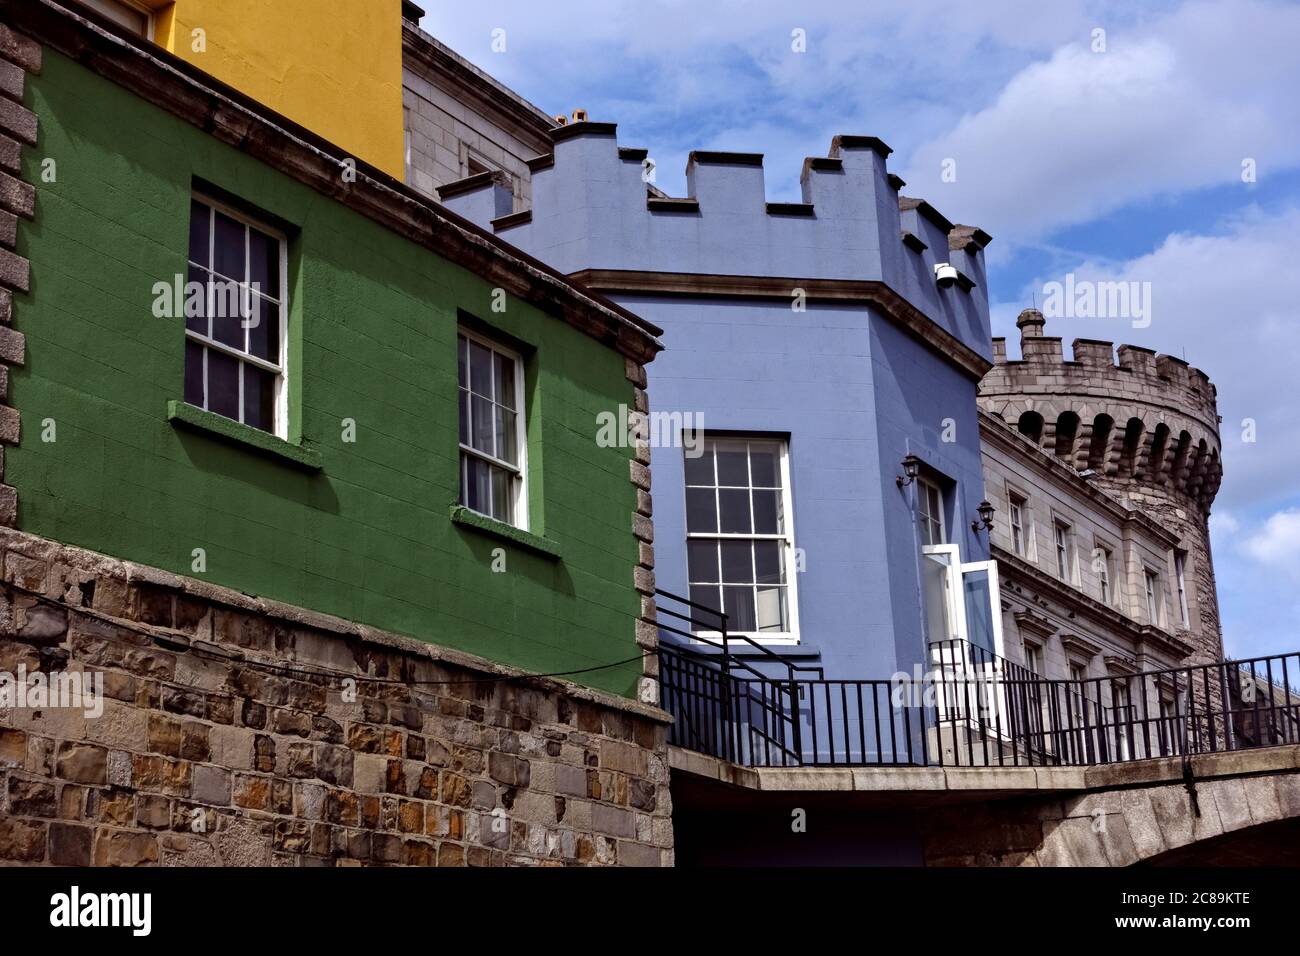 Dublin Castle Bunte Mauern der State Apartments, Record Tower, 13. Jahrhundert. Dublin, Irland, Europa, Europäische Union, EU. Nahaufnahme. Stockfoto